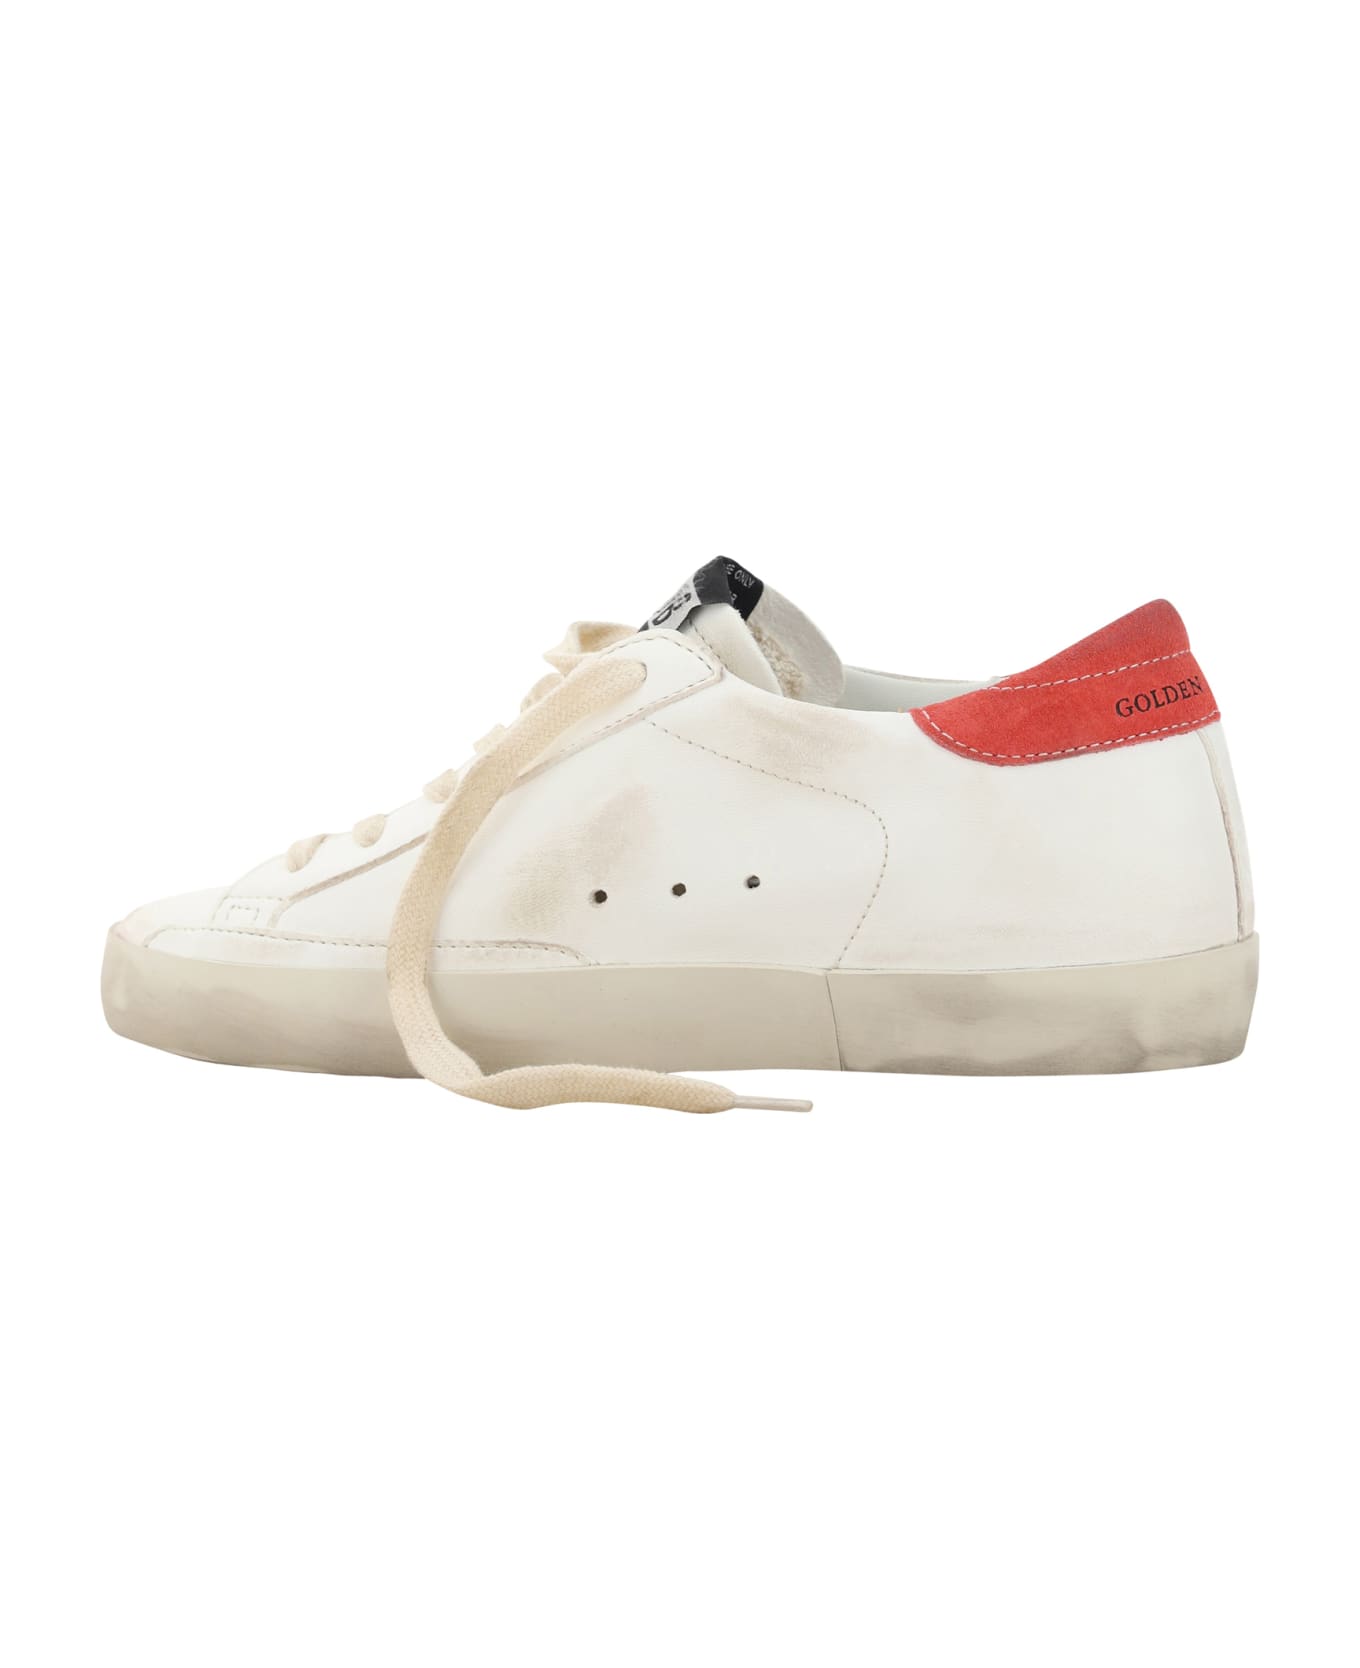 Golden Goose Superstar Classic Leather Sneakers - Cream/Fucsia スニーカー